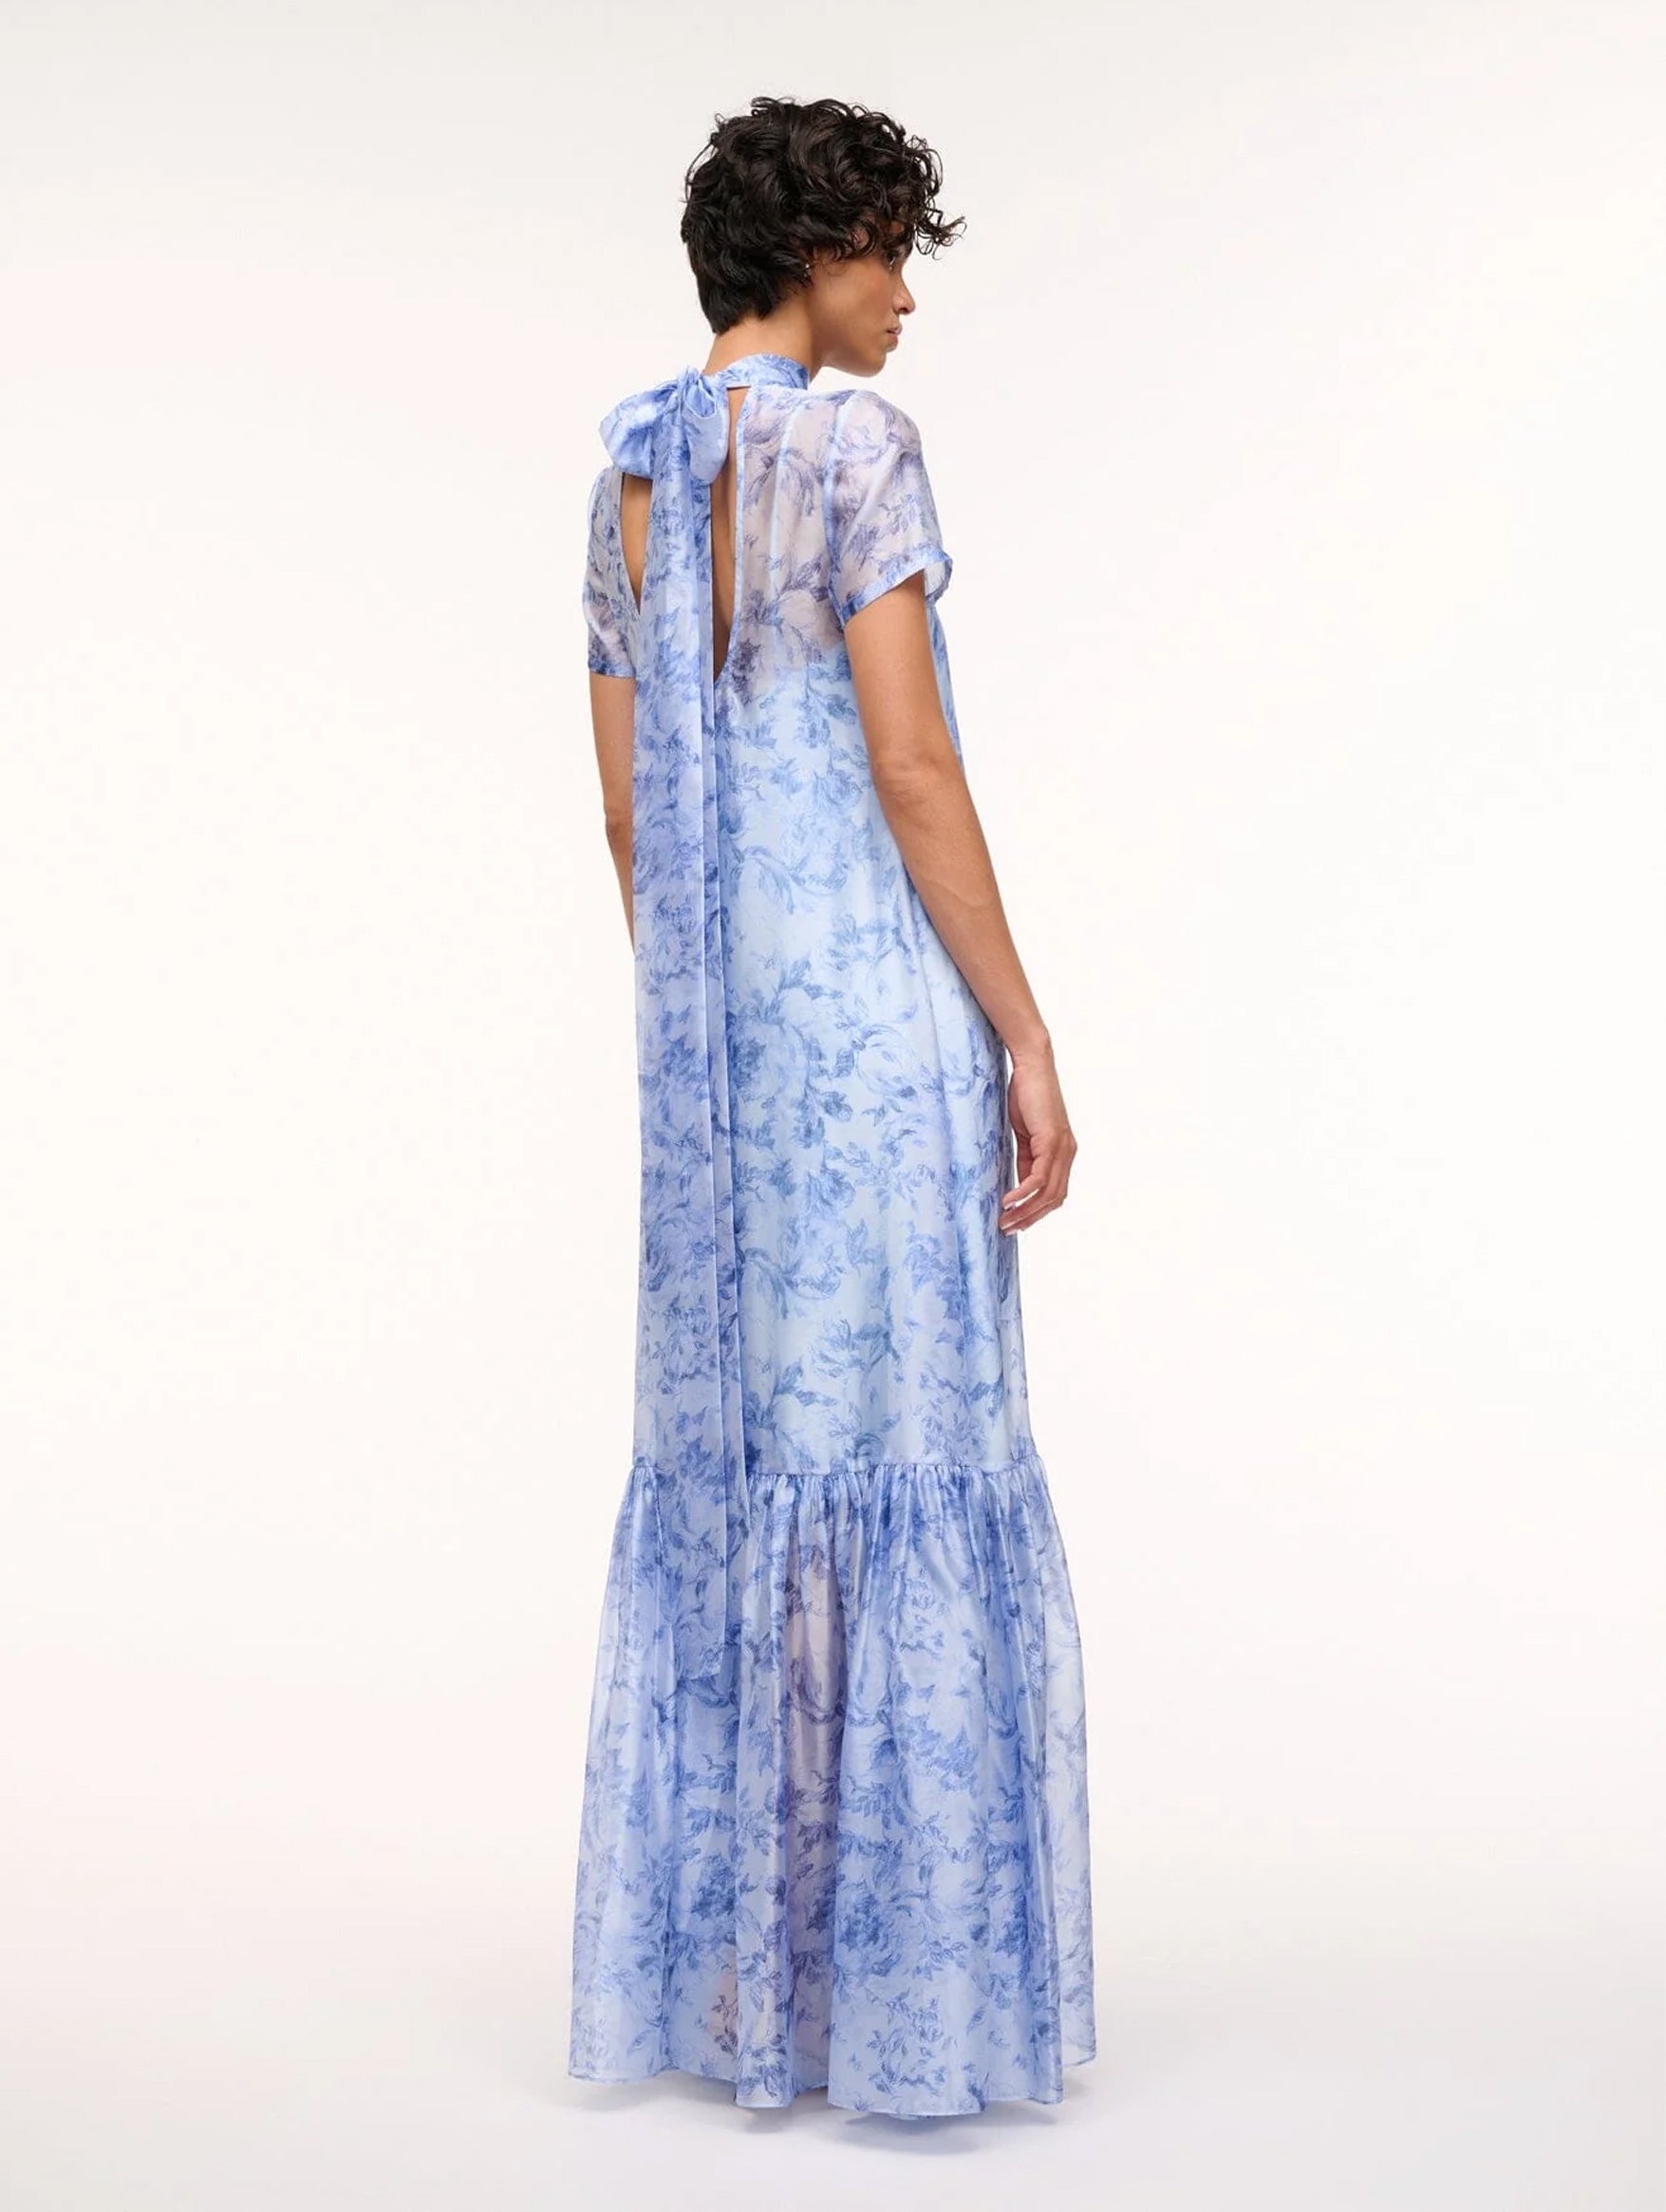 Calluna Dress in Periwinkle Floral Blue